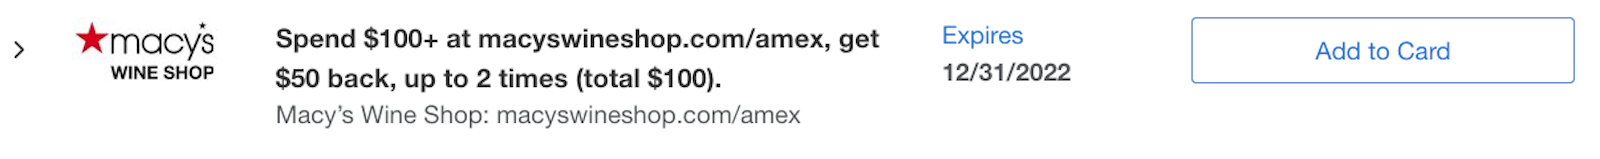 amex wine offer